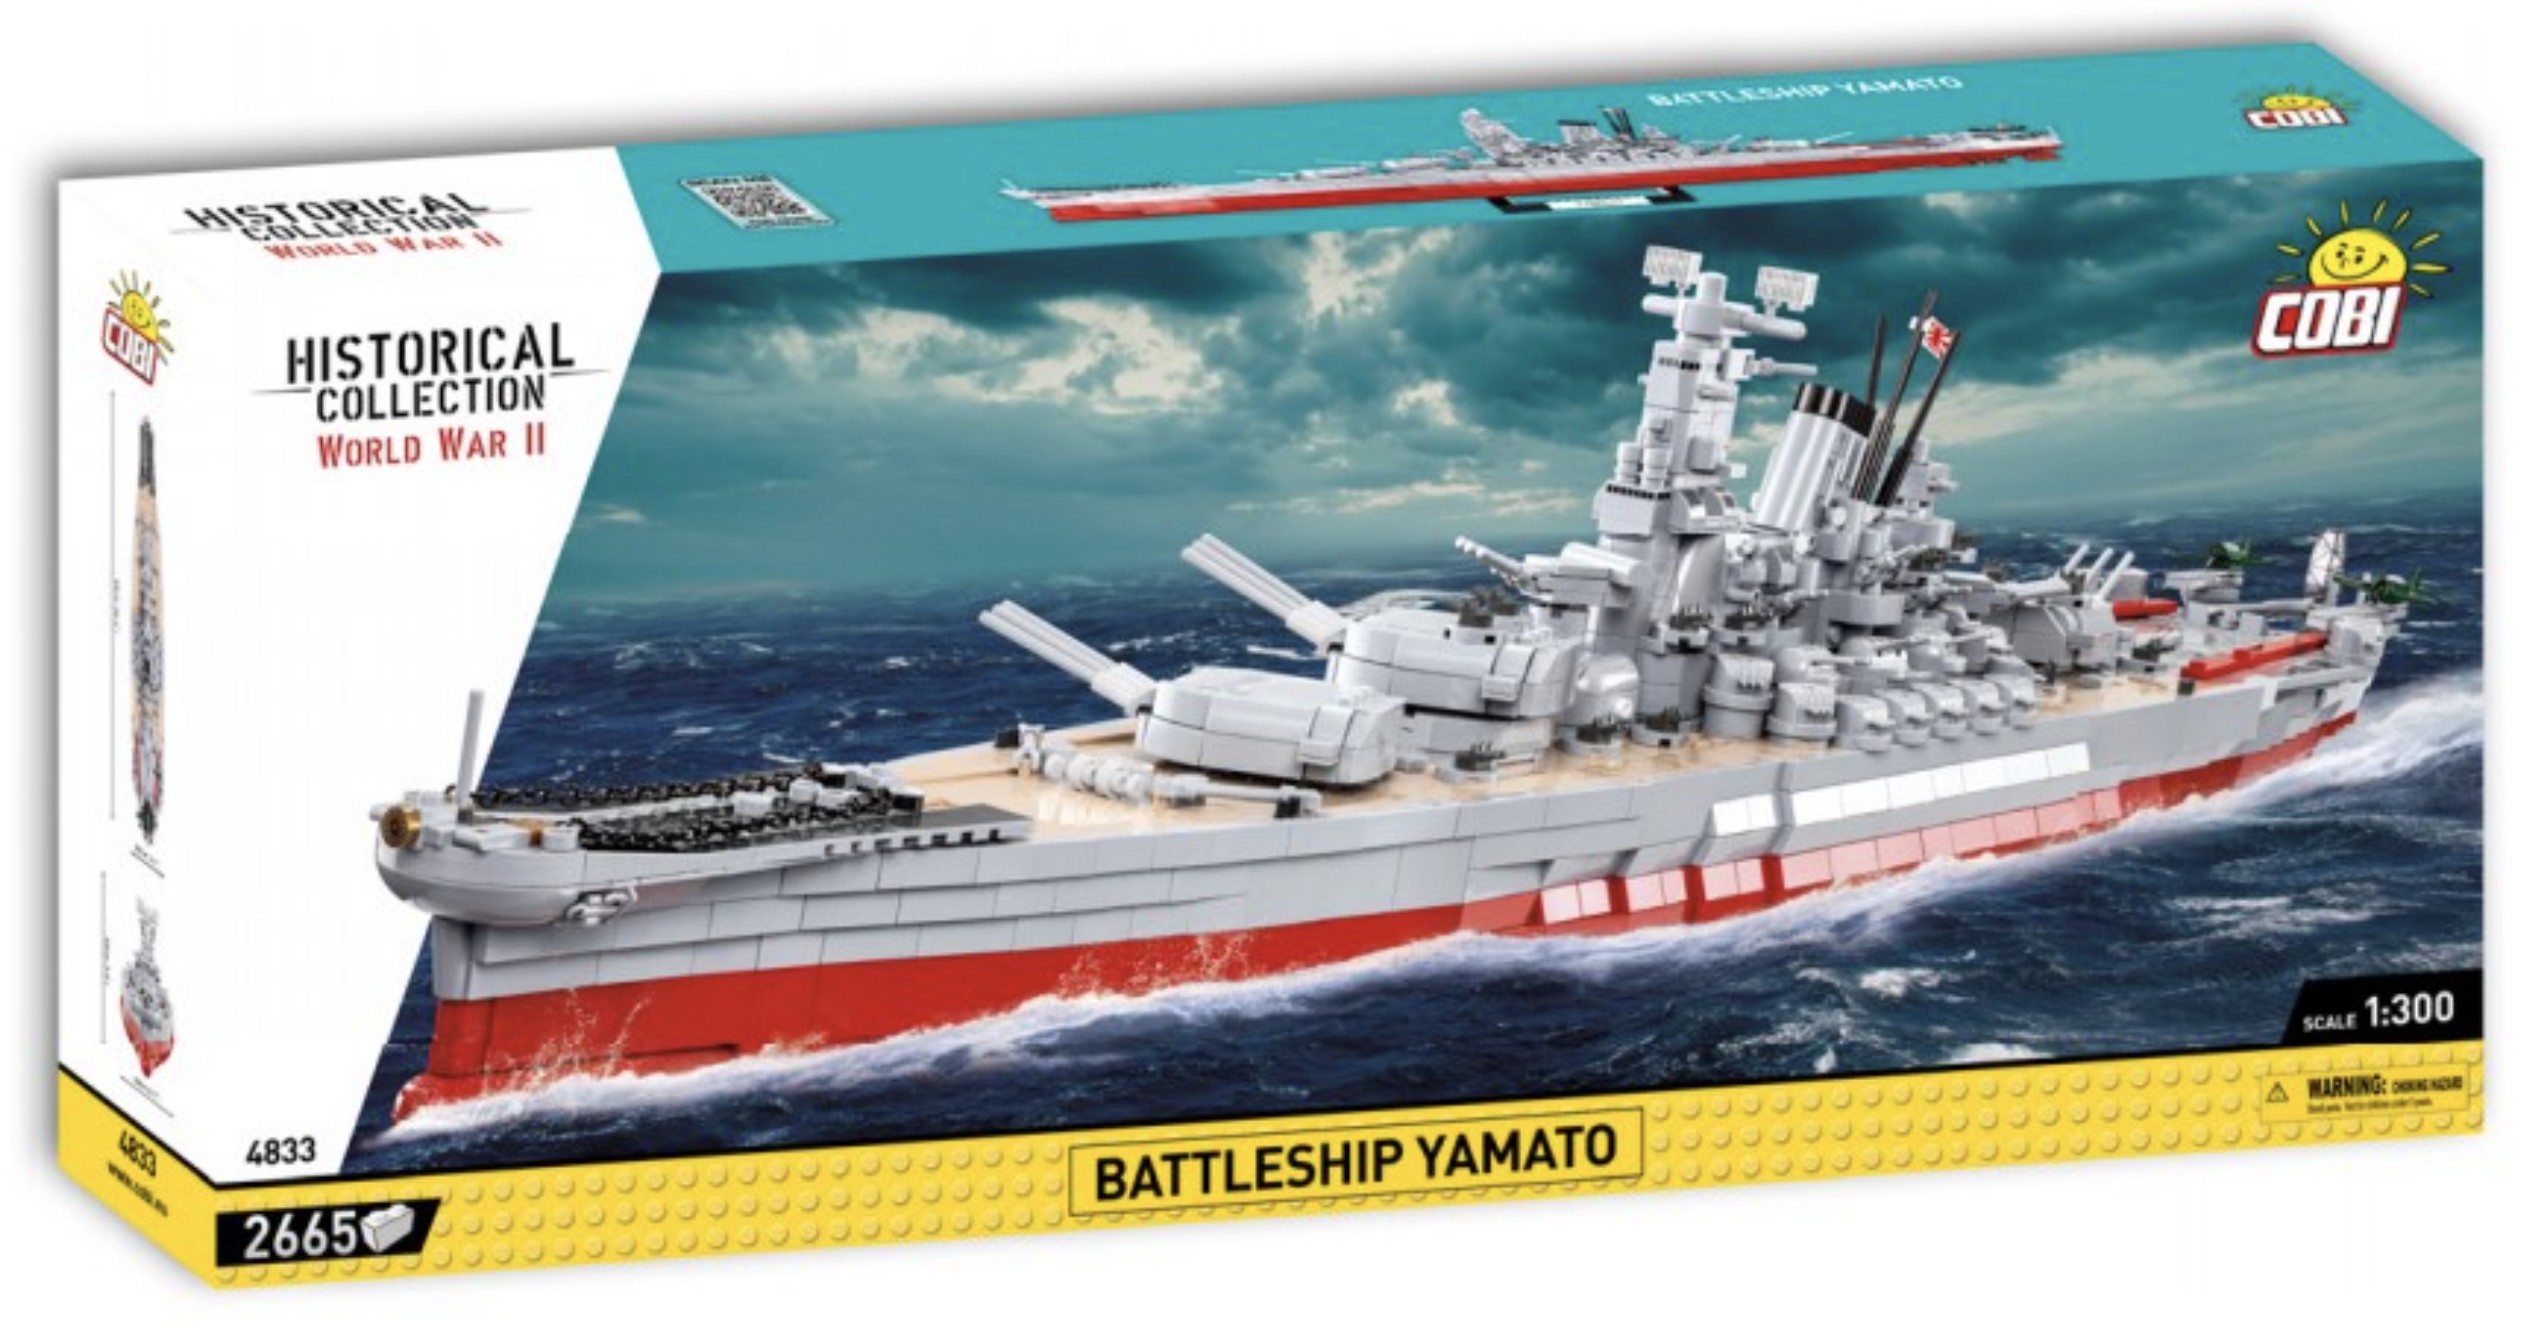 4833 - Battleship Yamato